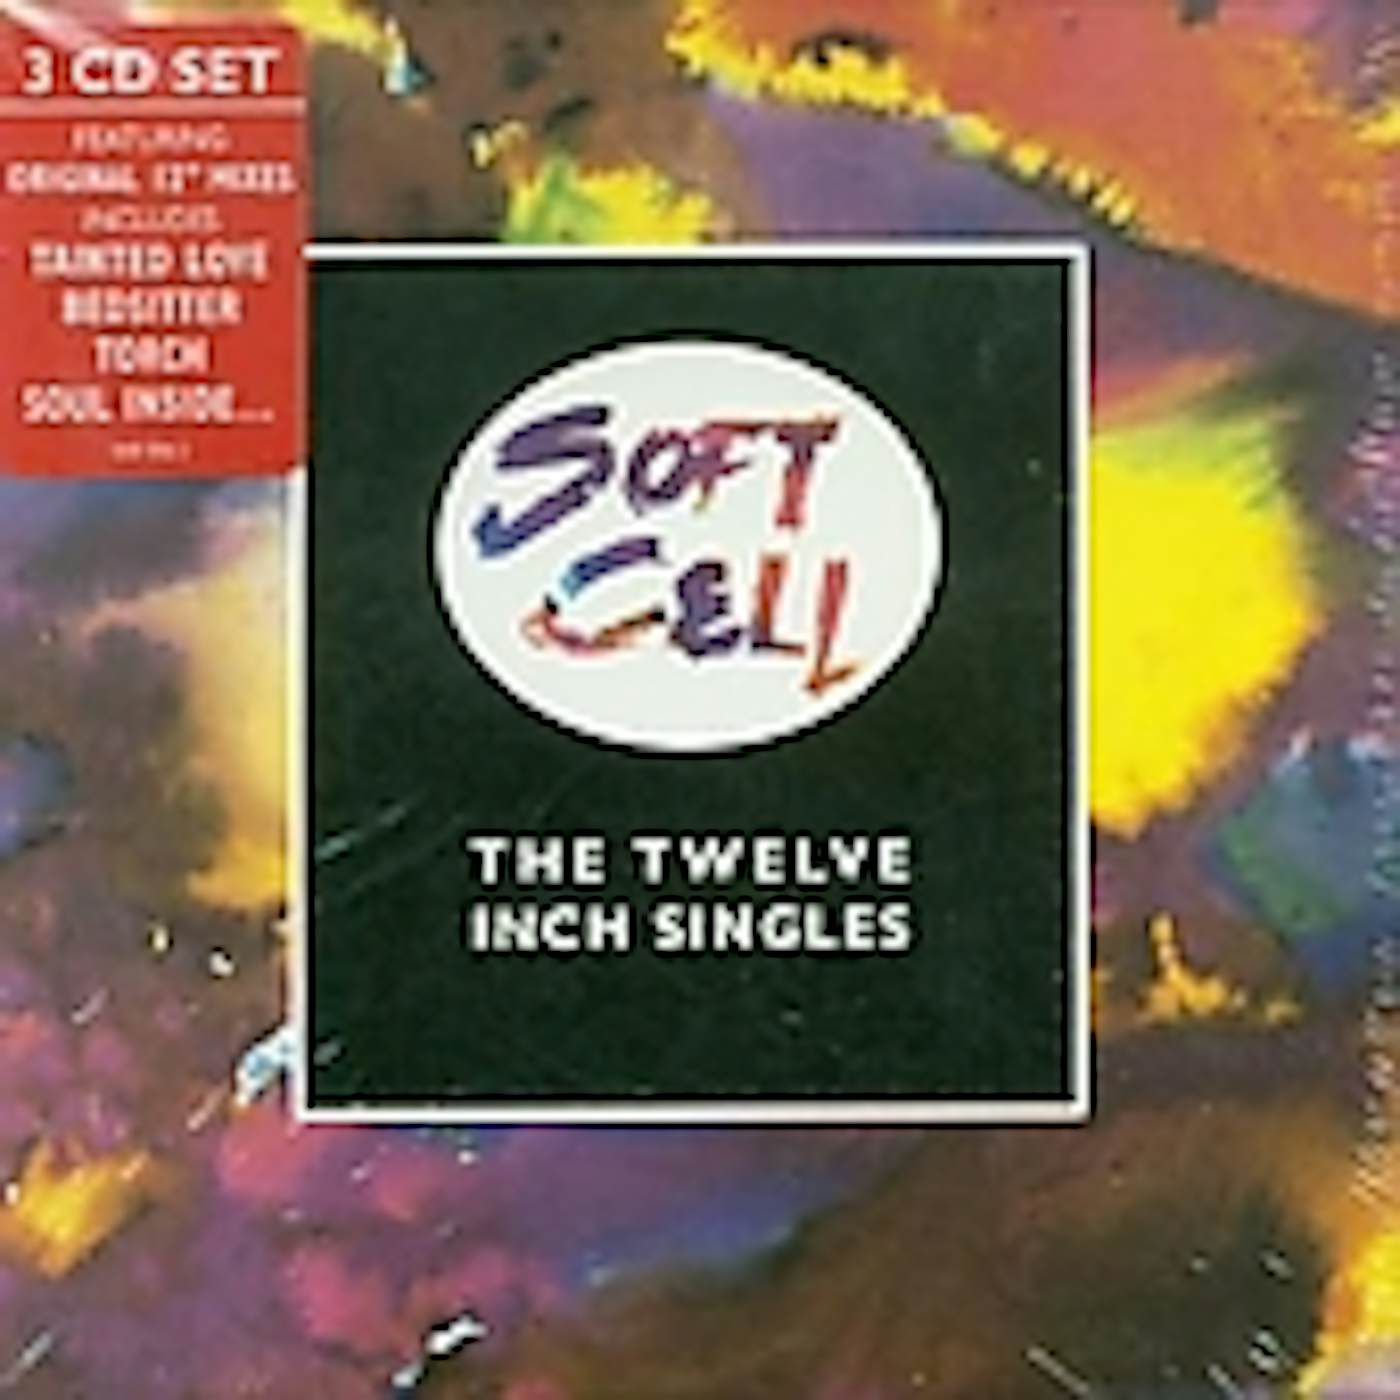 Soft Cell TWELVE INCH SINGLES CD